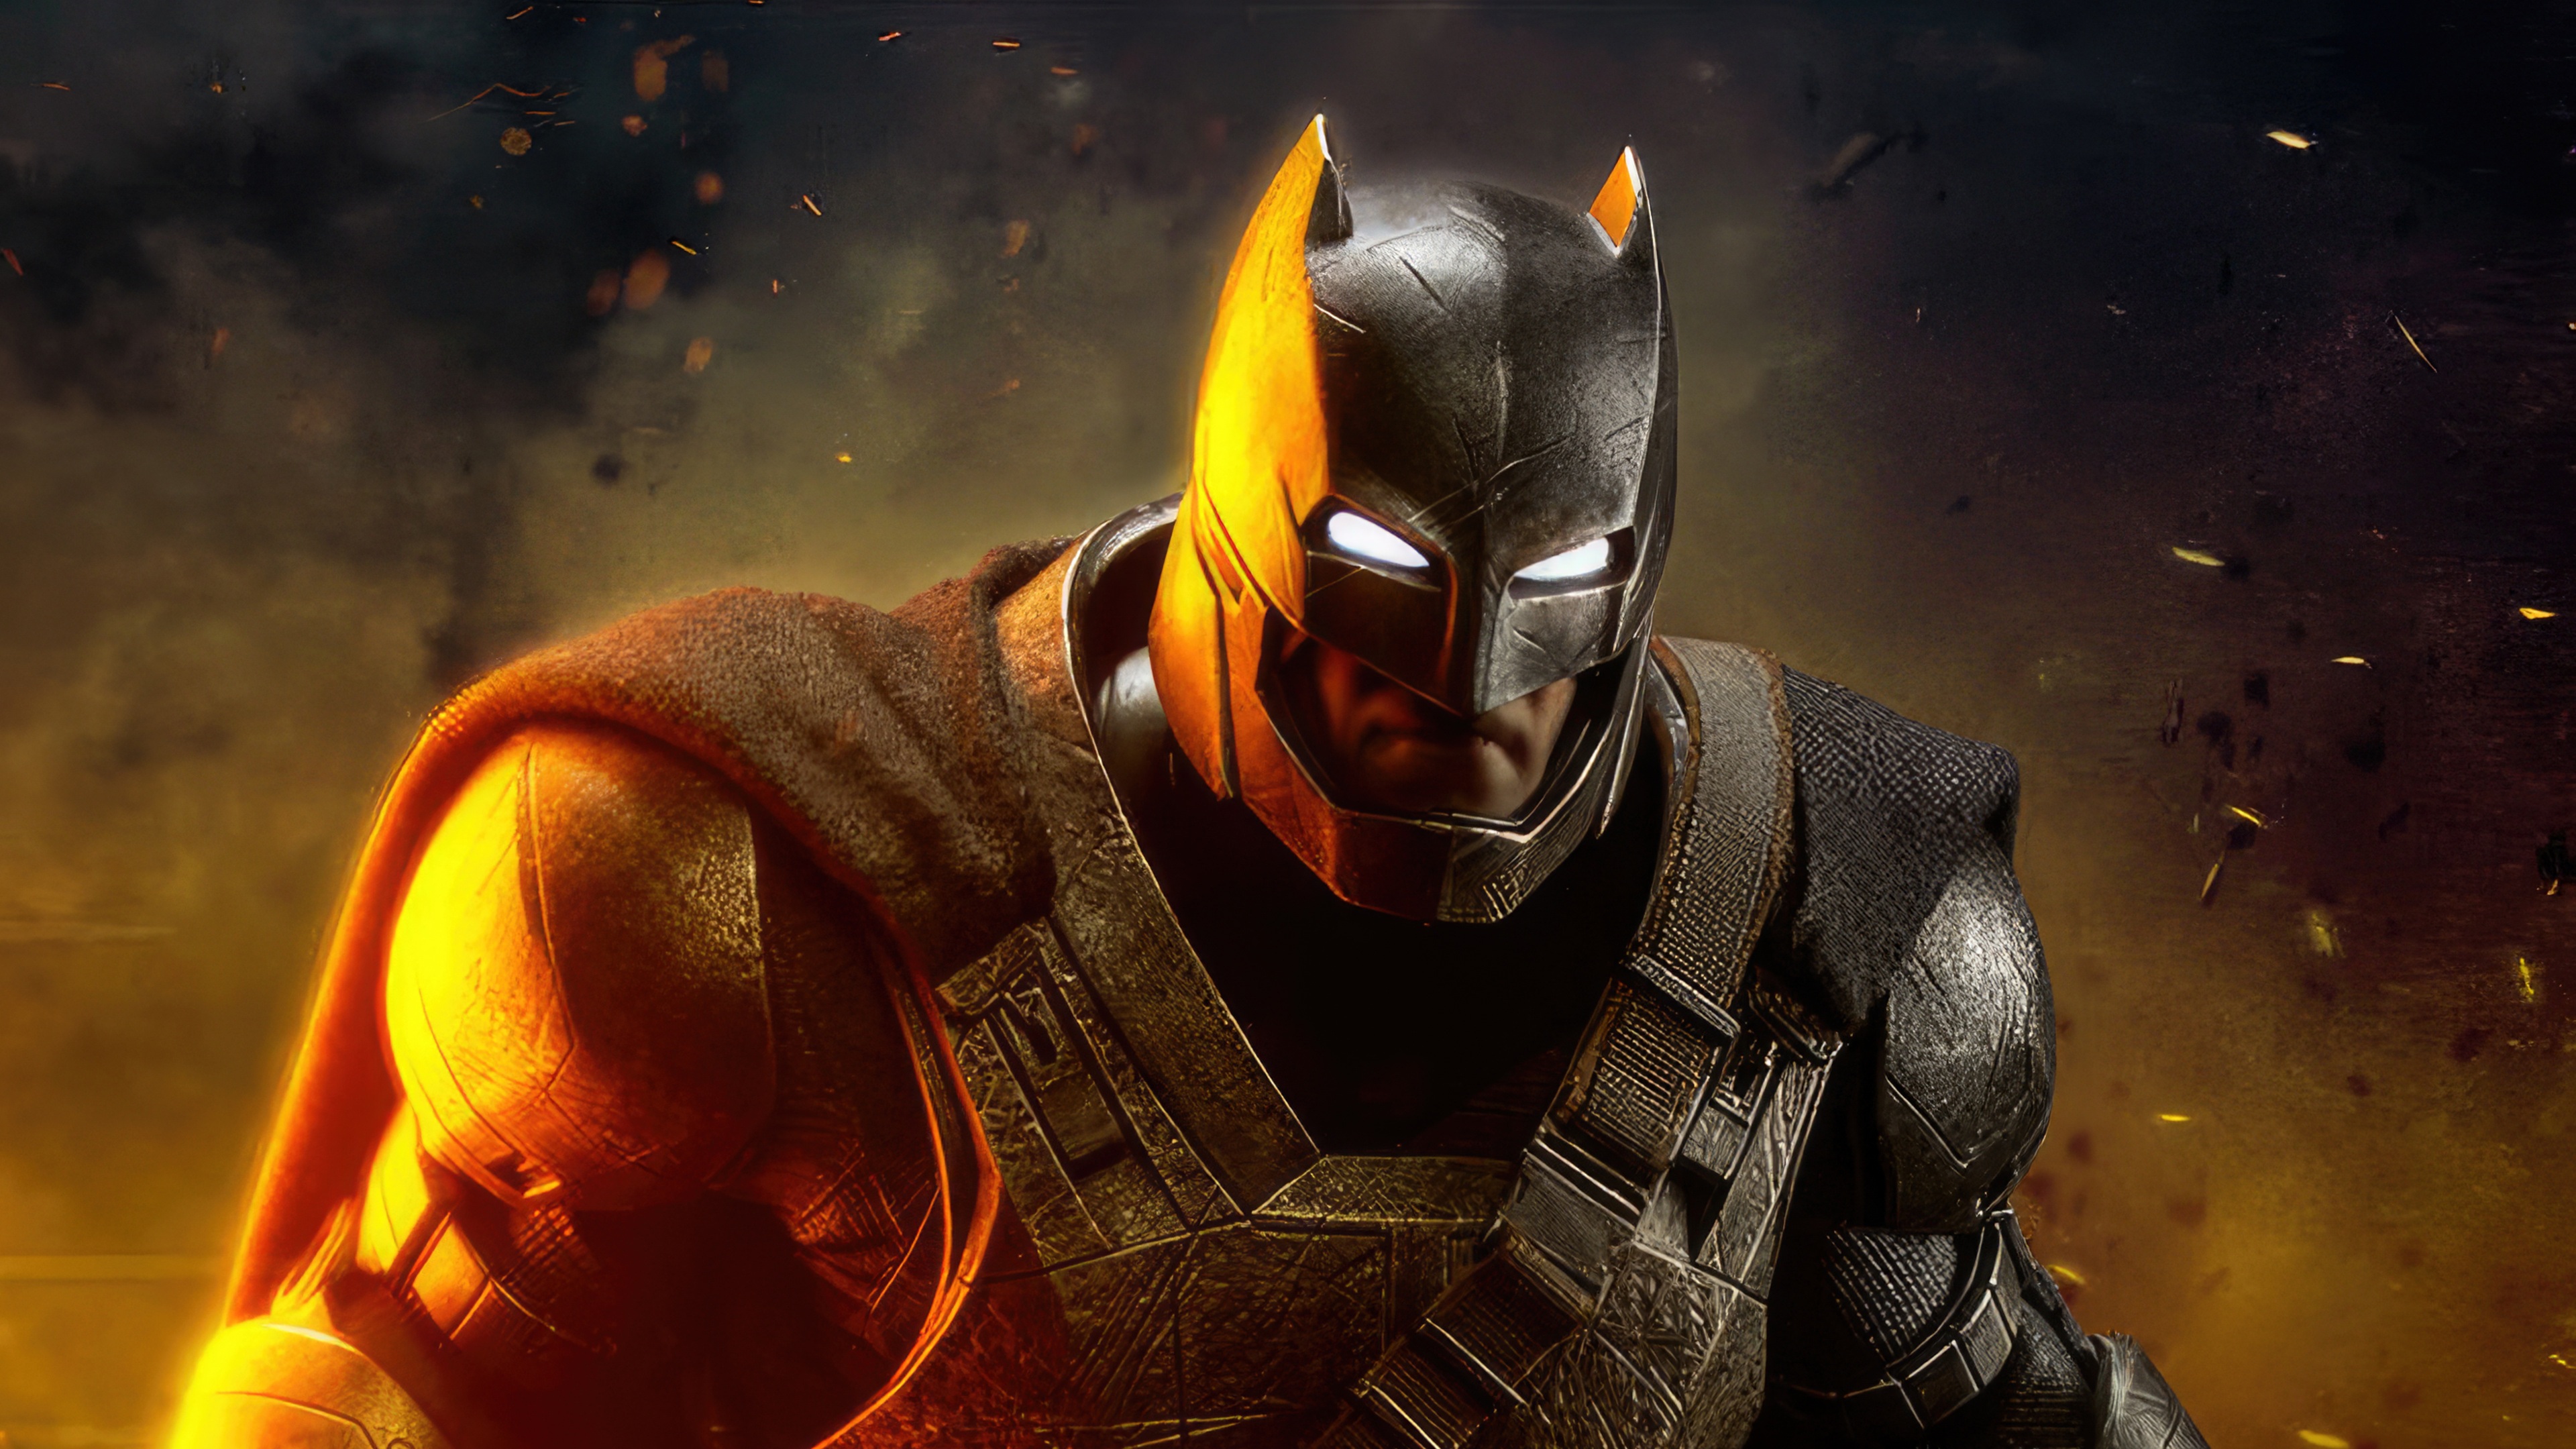 Nexus batman. Armored Batman. DC Multiverse Armored Batman Dawn of Justice Figure.